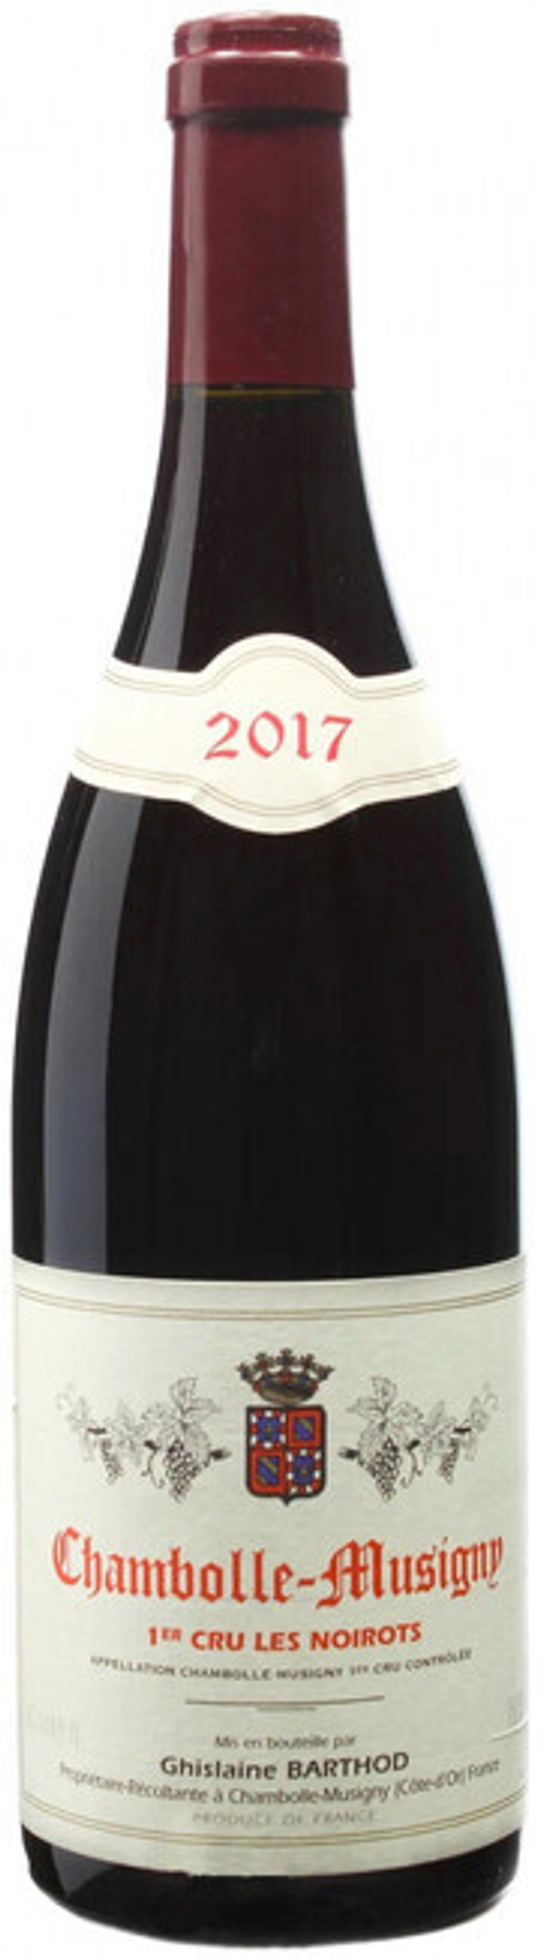 Вино Domaine Ghislaine Barthod Chambolle-Musigny 1er Cru Les Noirots AOC, 0,75 л.